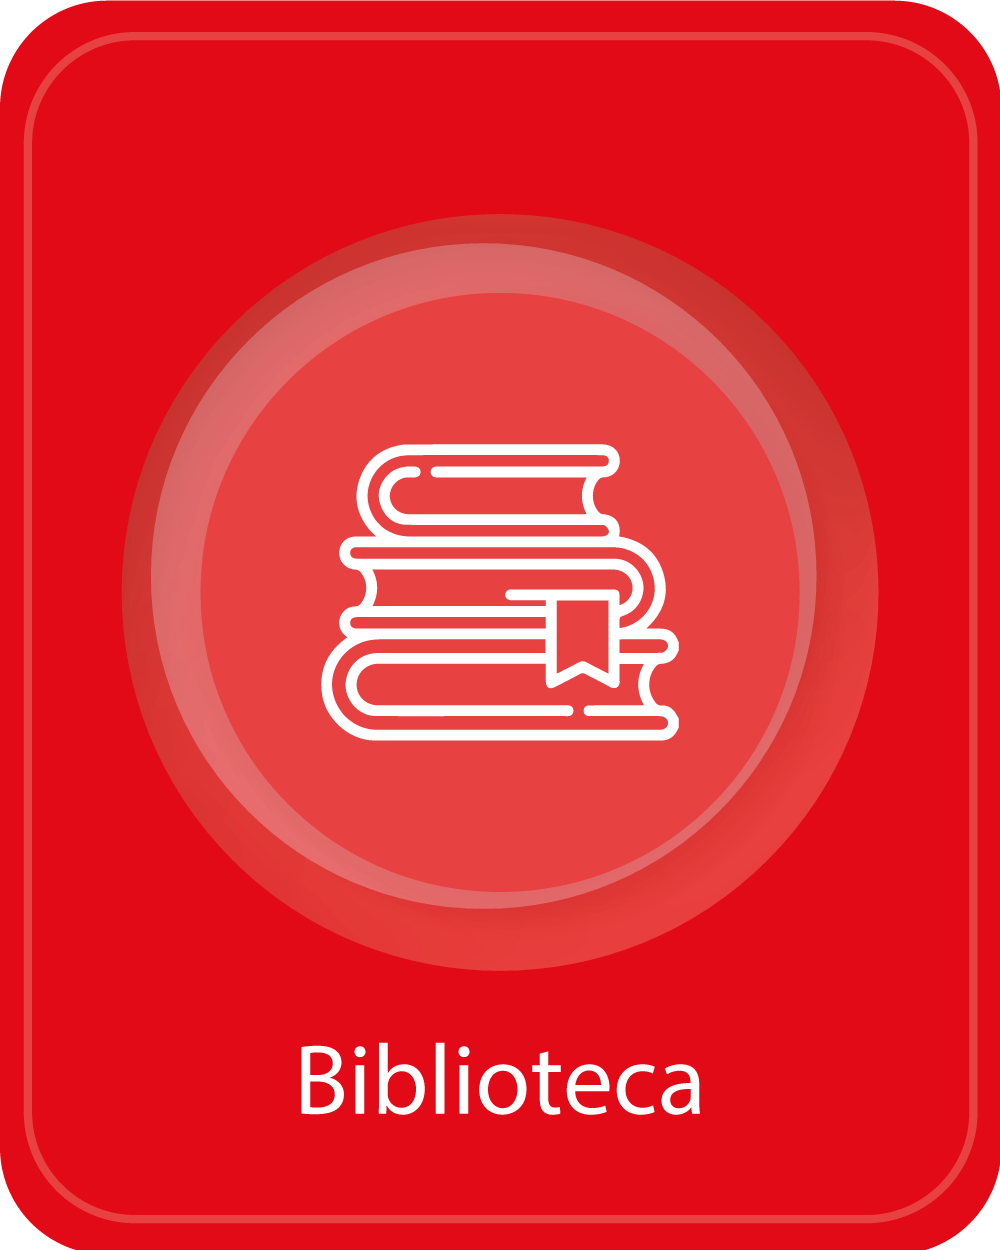 boton-Biblioteca